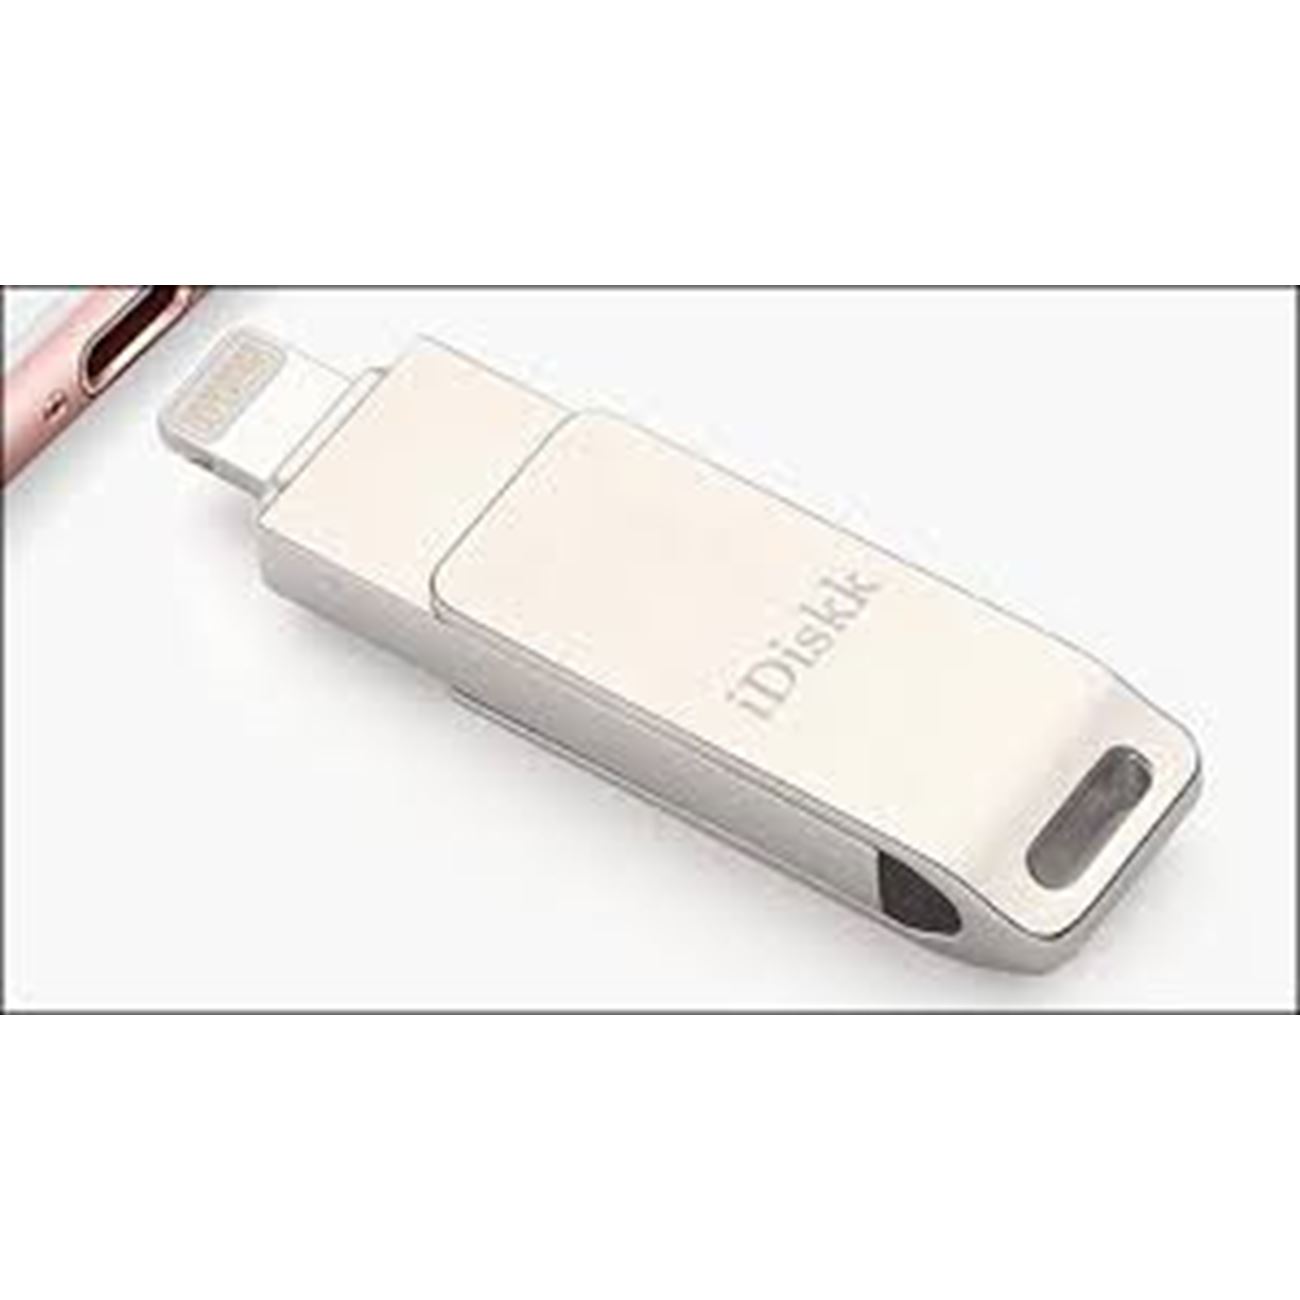 Iphone флеш. USB флешка для iphone. A data флешка для айфона. FLASHDRIVE 4 in 1. FLASHDRIVE для iphone XR.